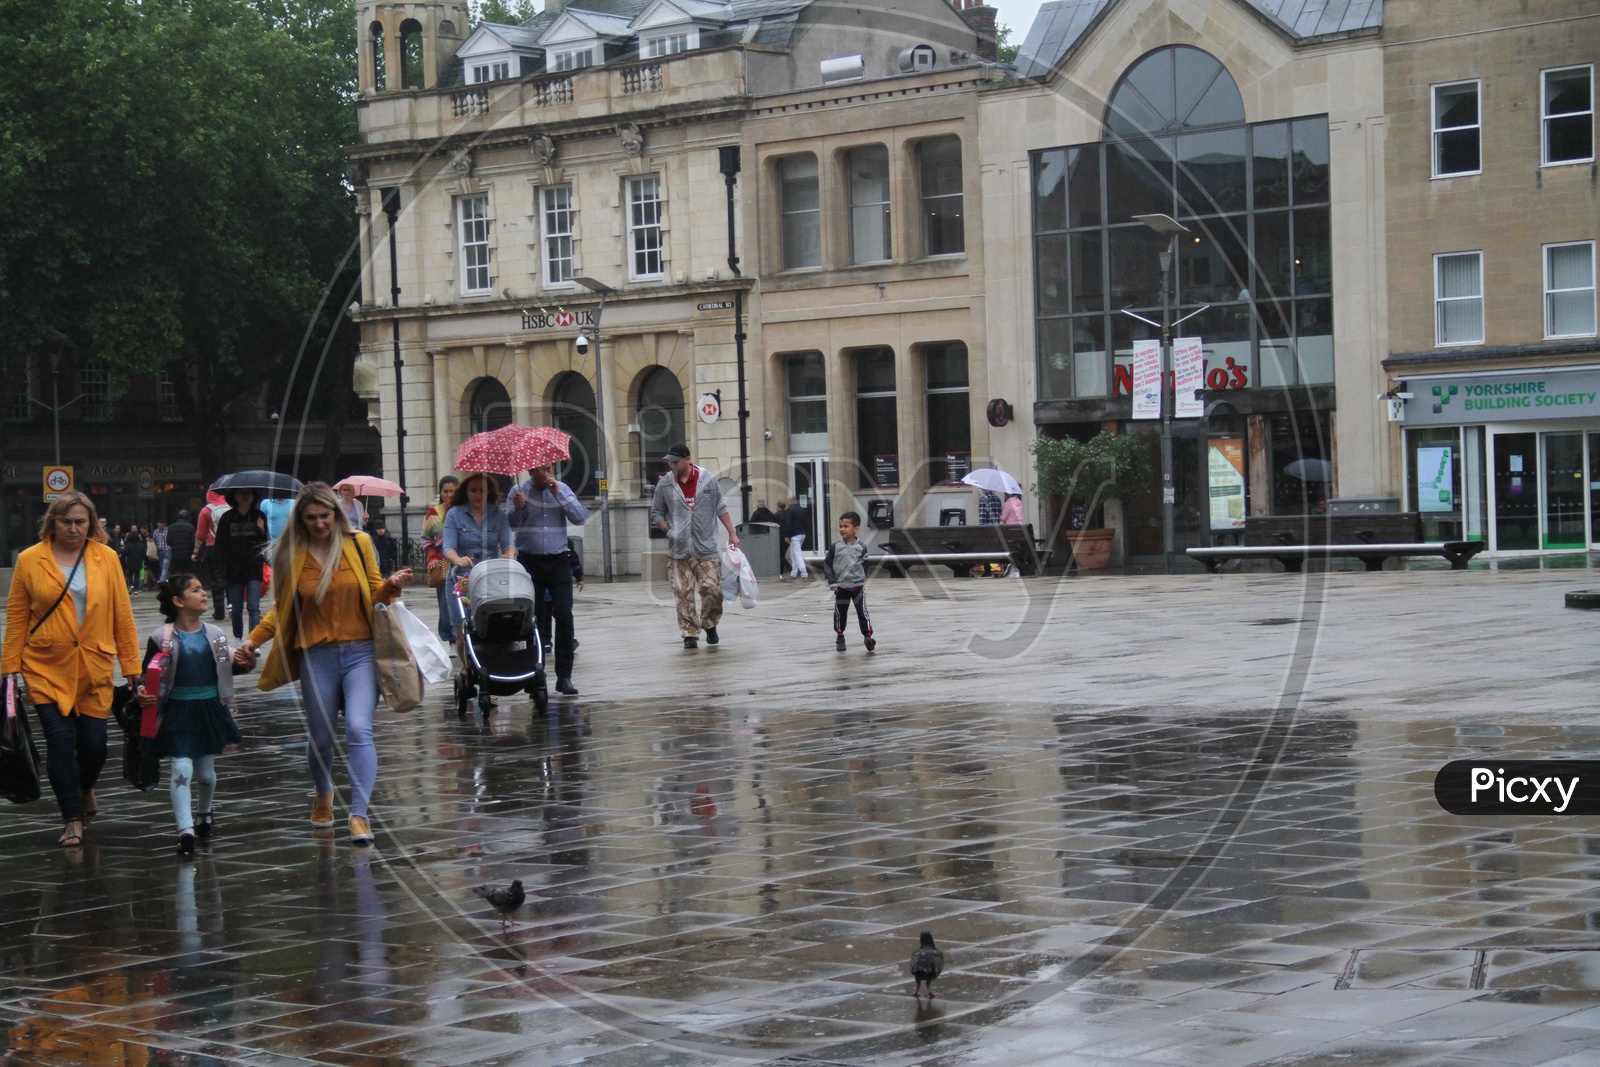 People walking in London Streets while raining